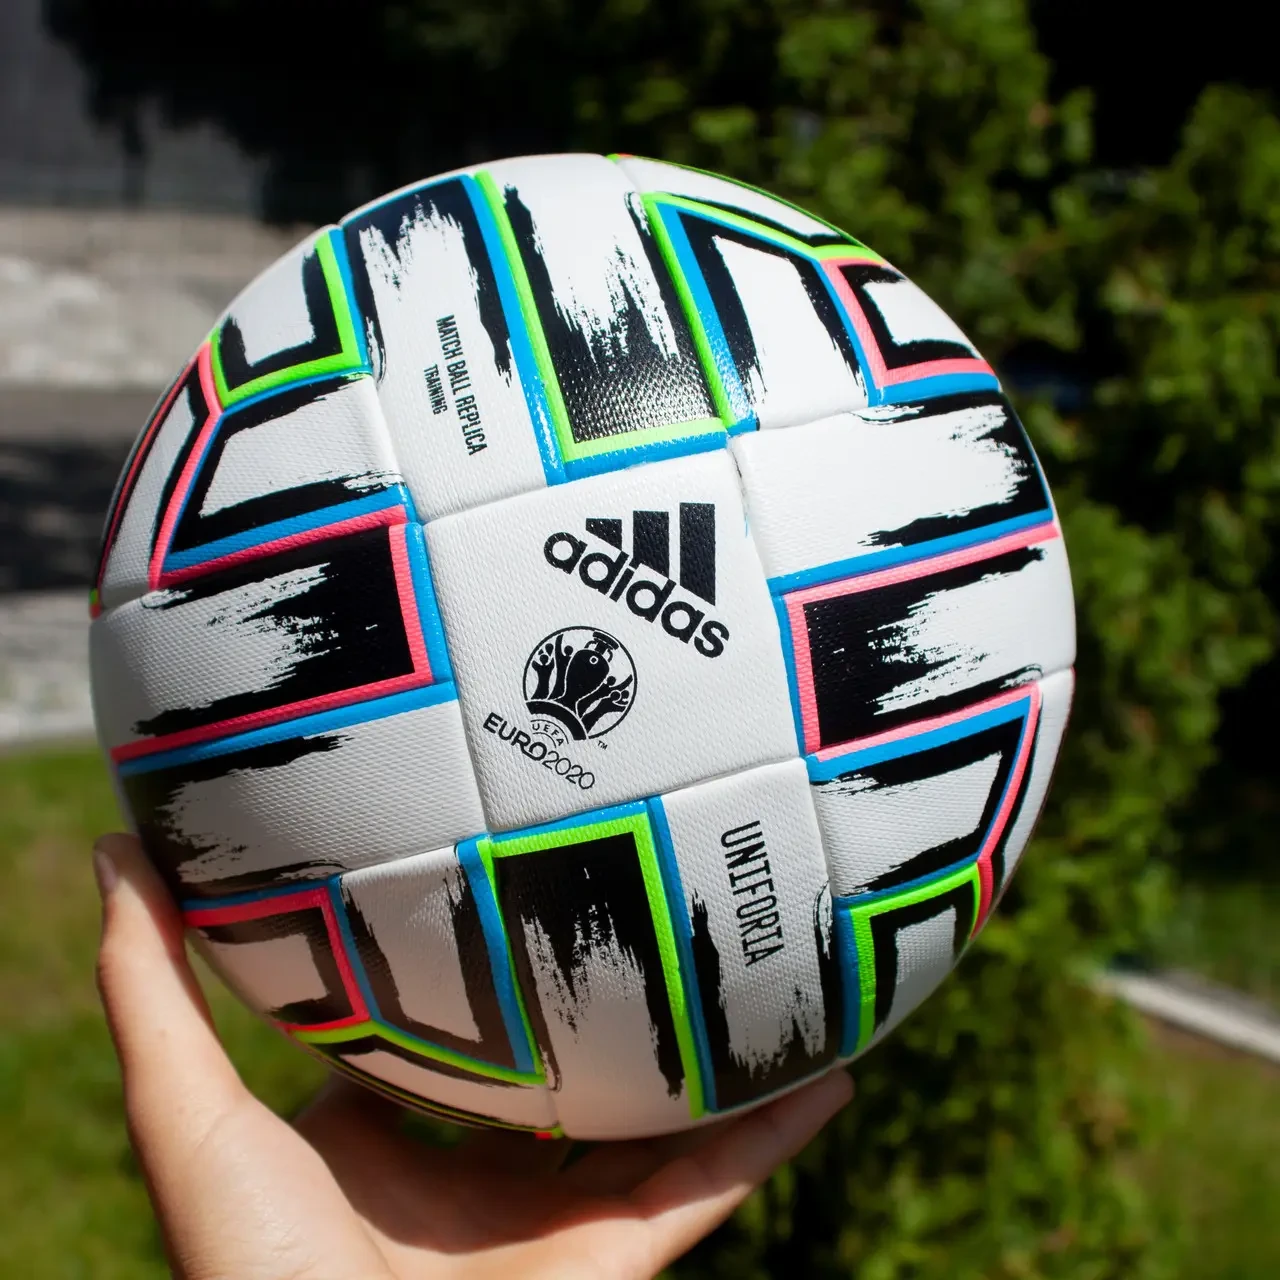 Футбольний м'яч Adidas PRO UNIFORIA